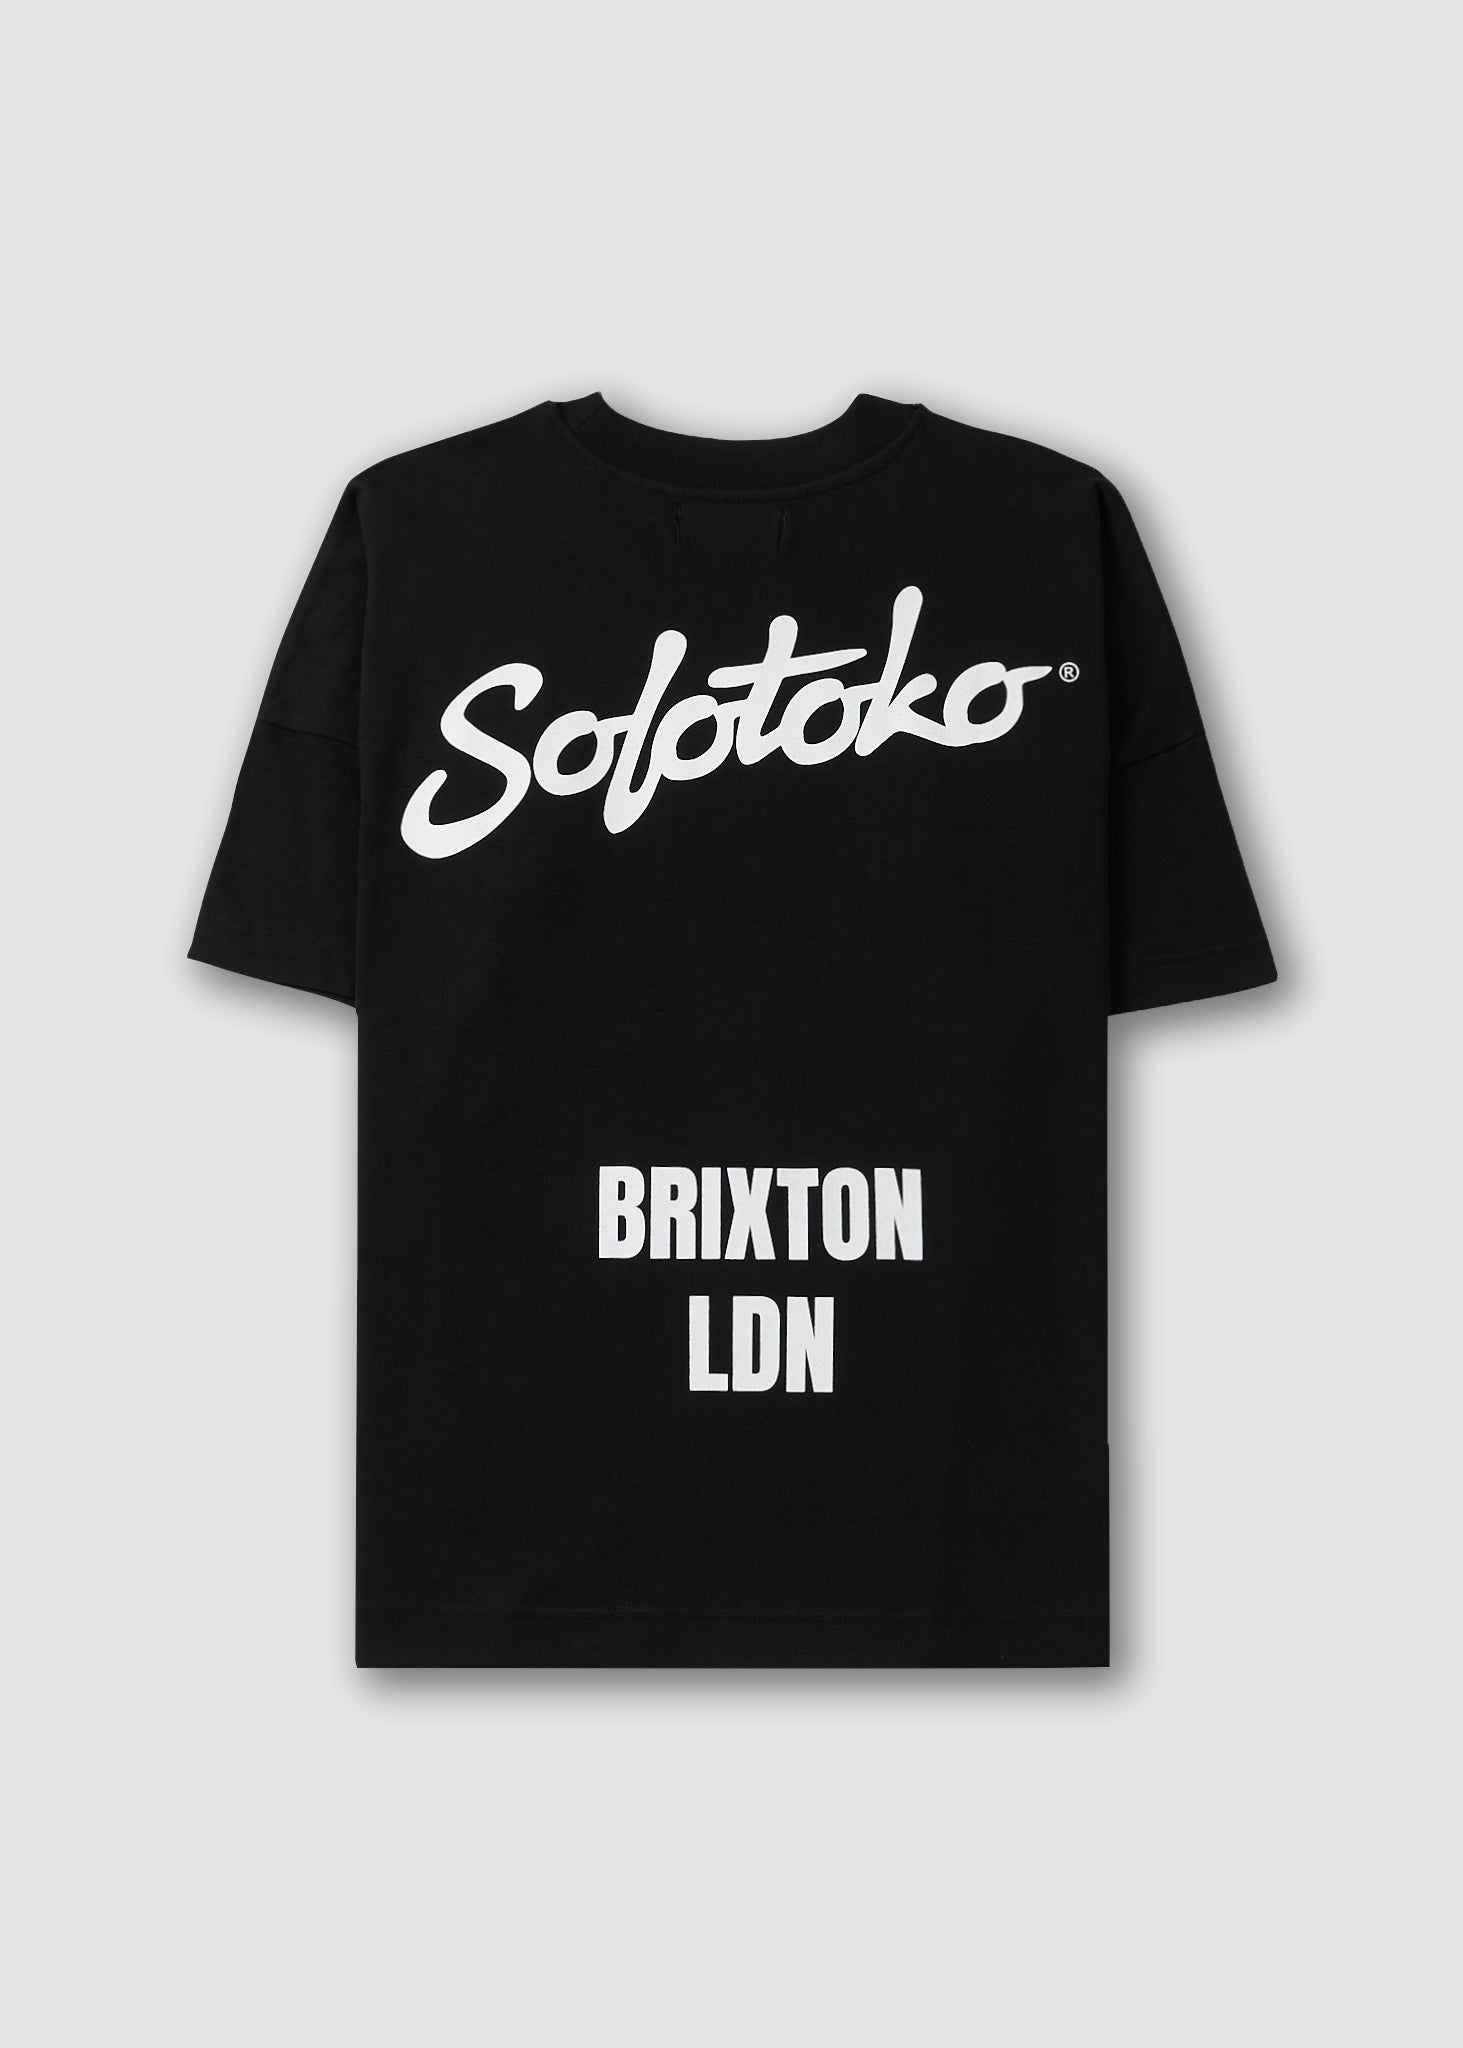 SOLOTOKO BRIXTON LDN BLACK T-SHIRT